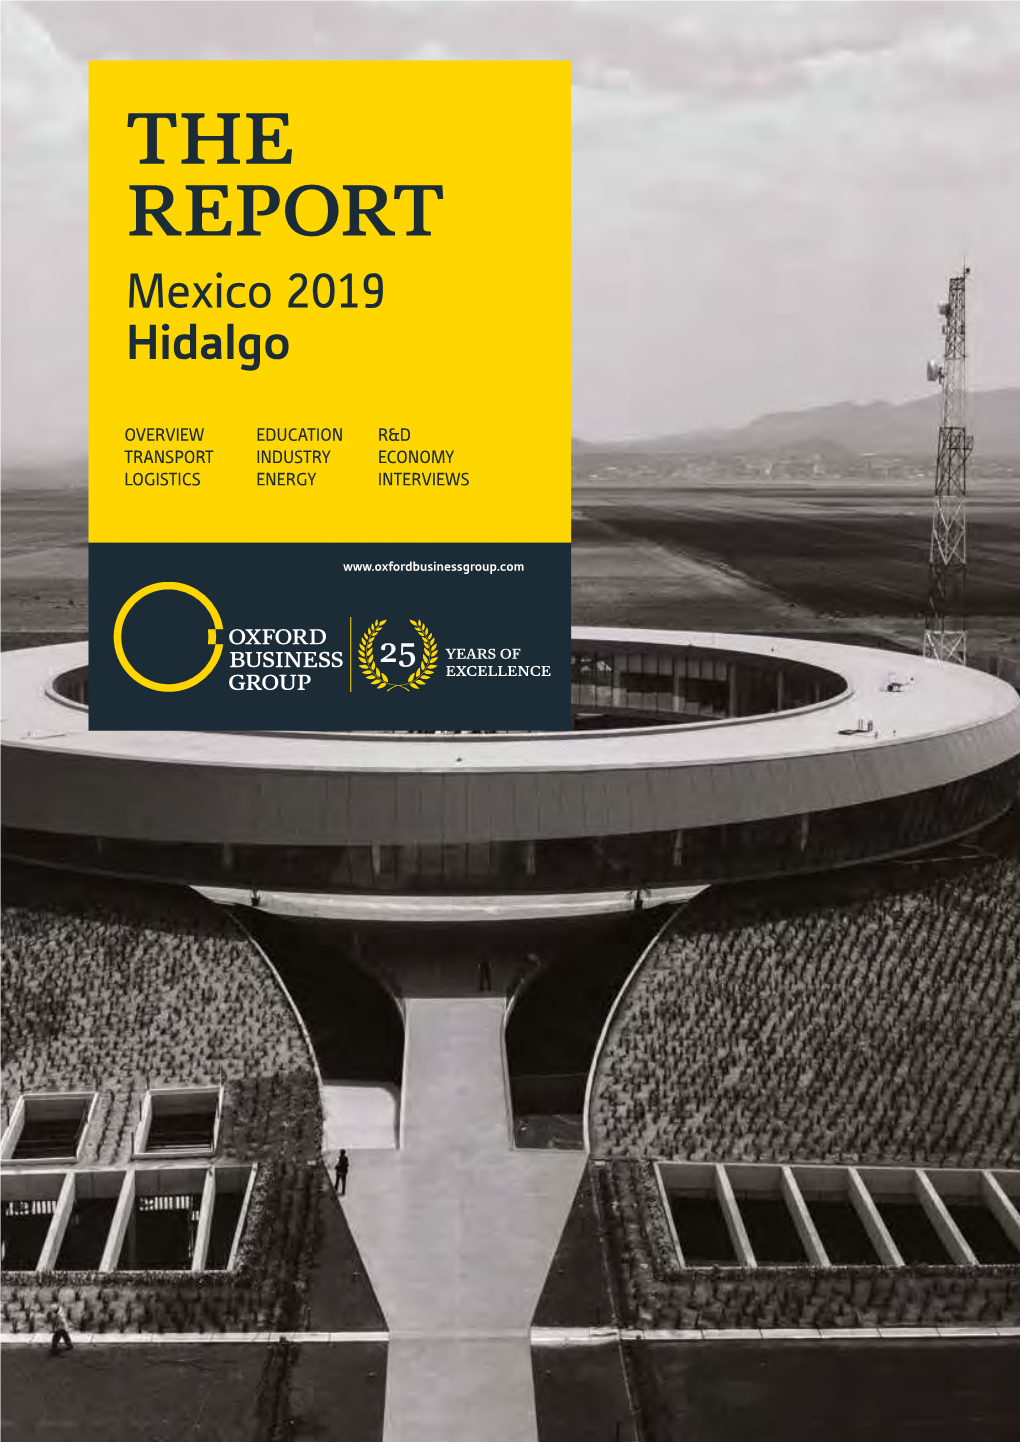 THE REPORT Mexico 2019 Hidalgo